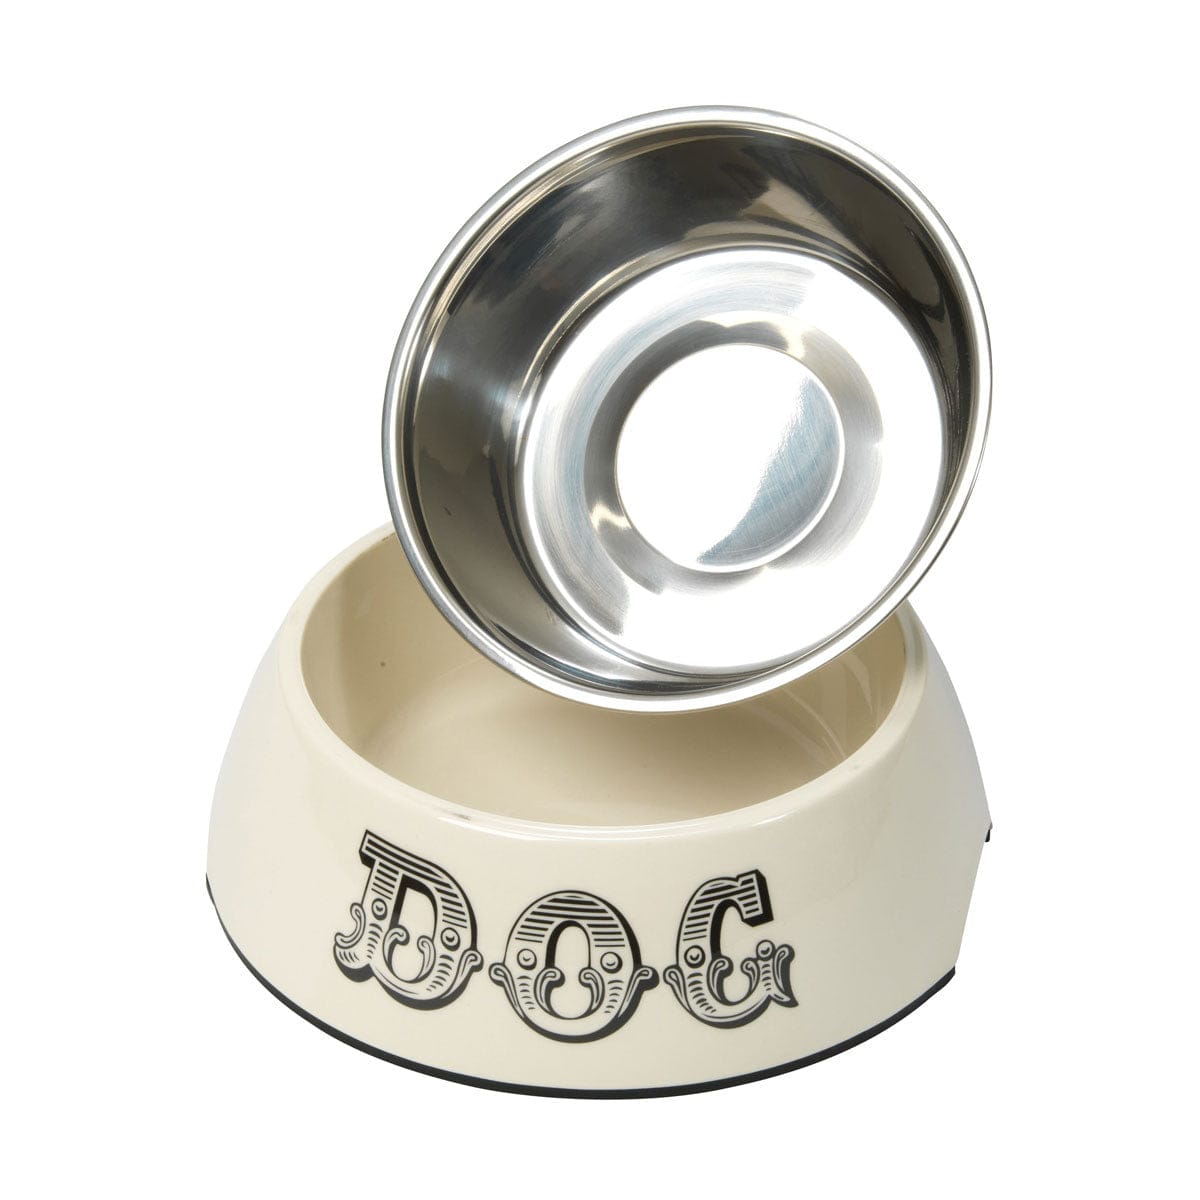 House of paws melamine dog bowl